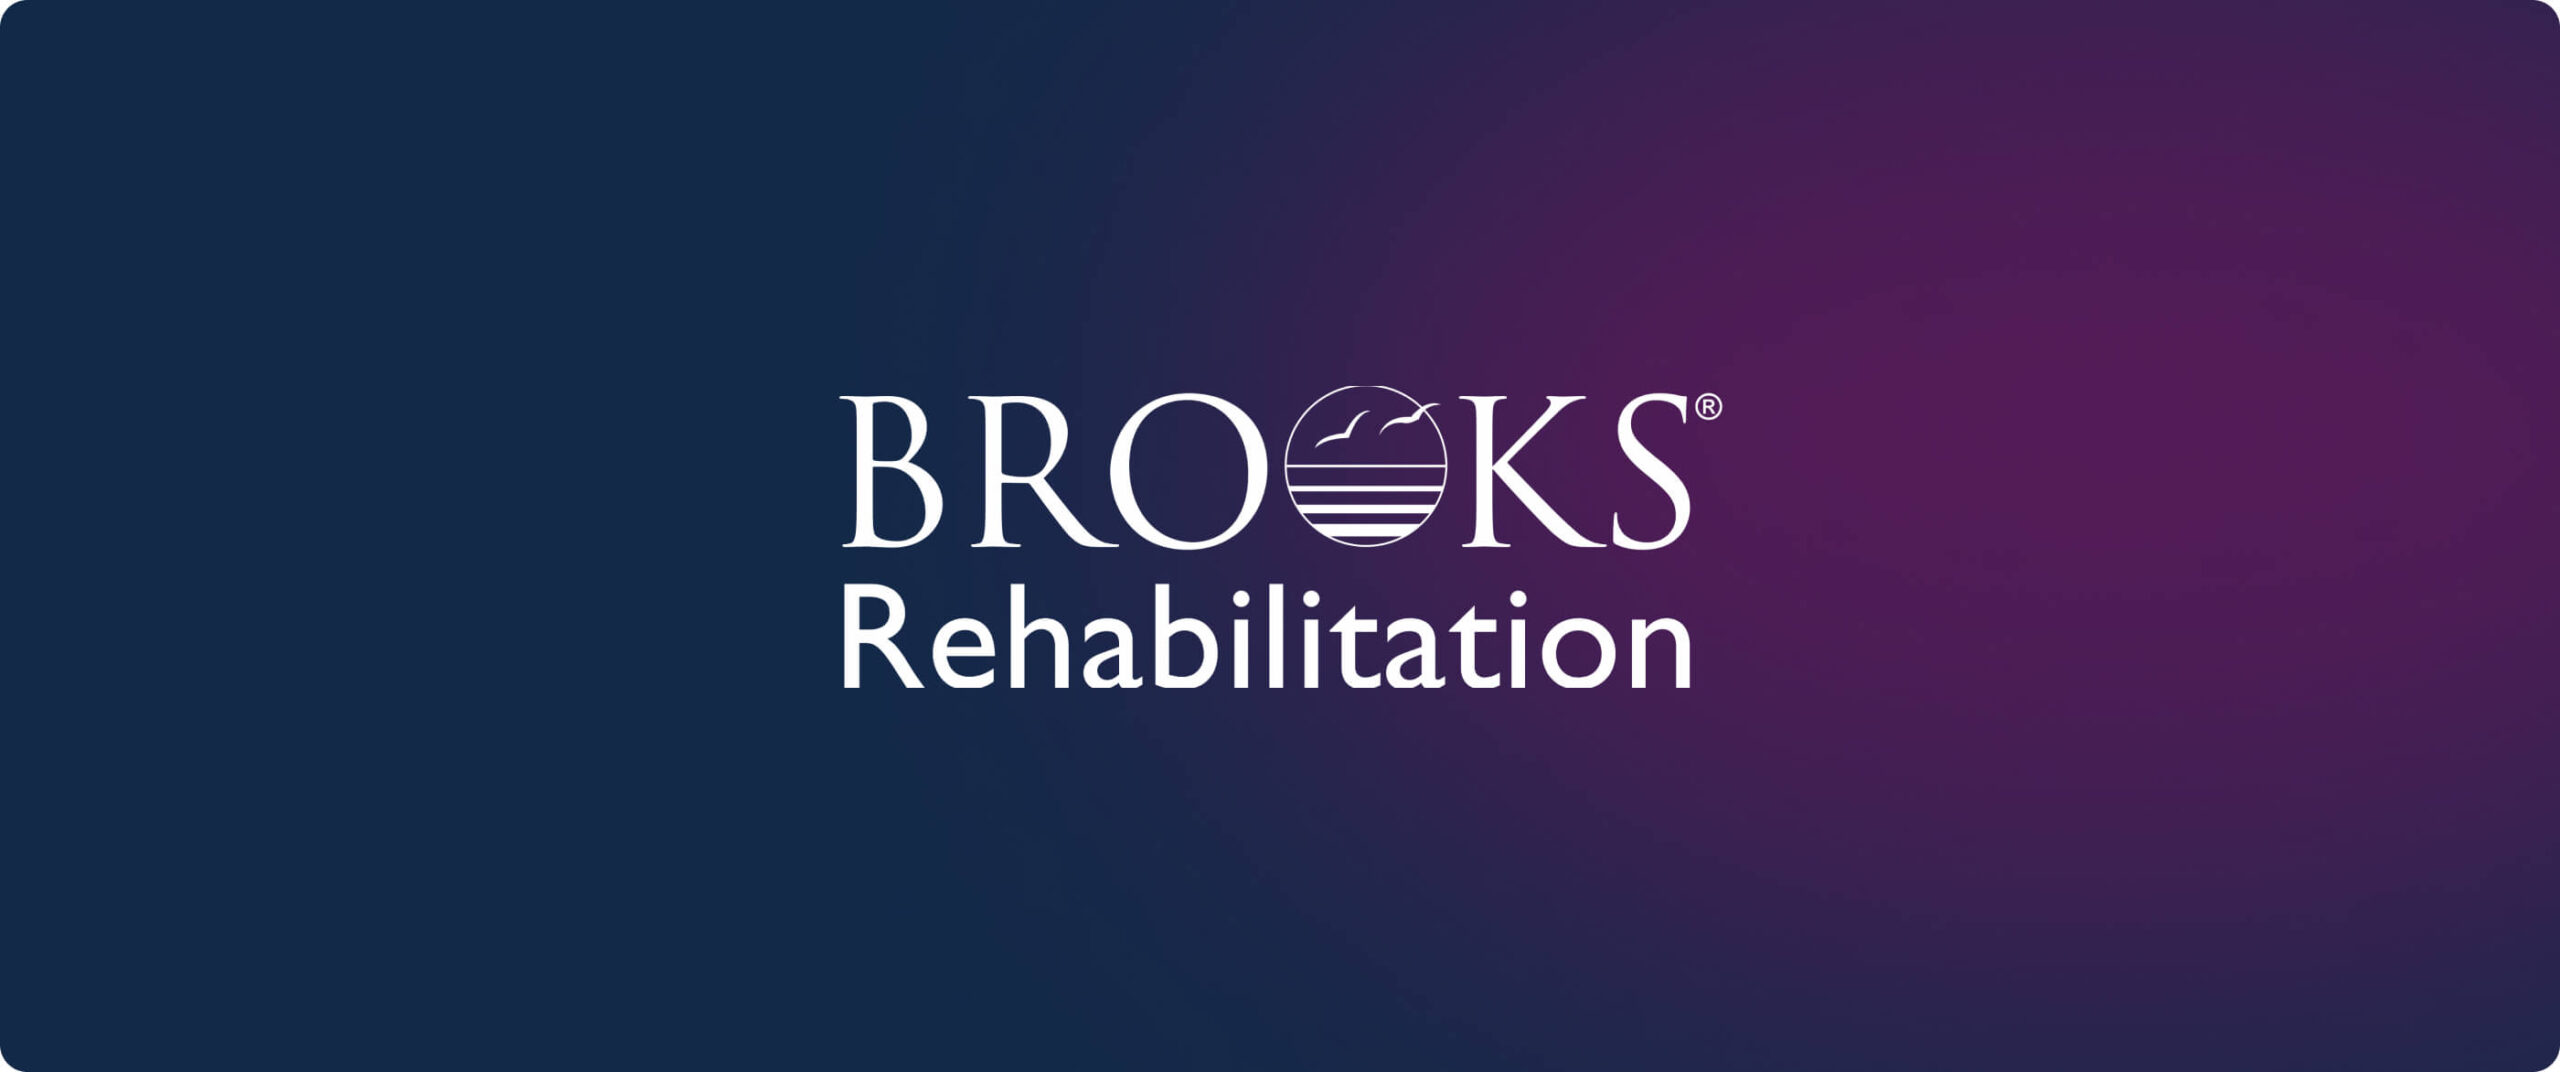 Brooks Rehabilitation logo on a gradient background